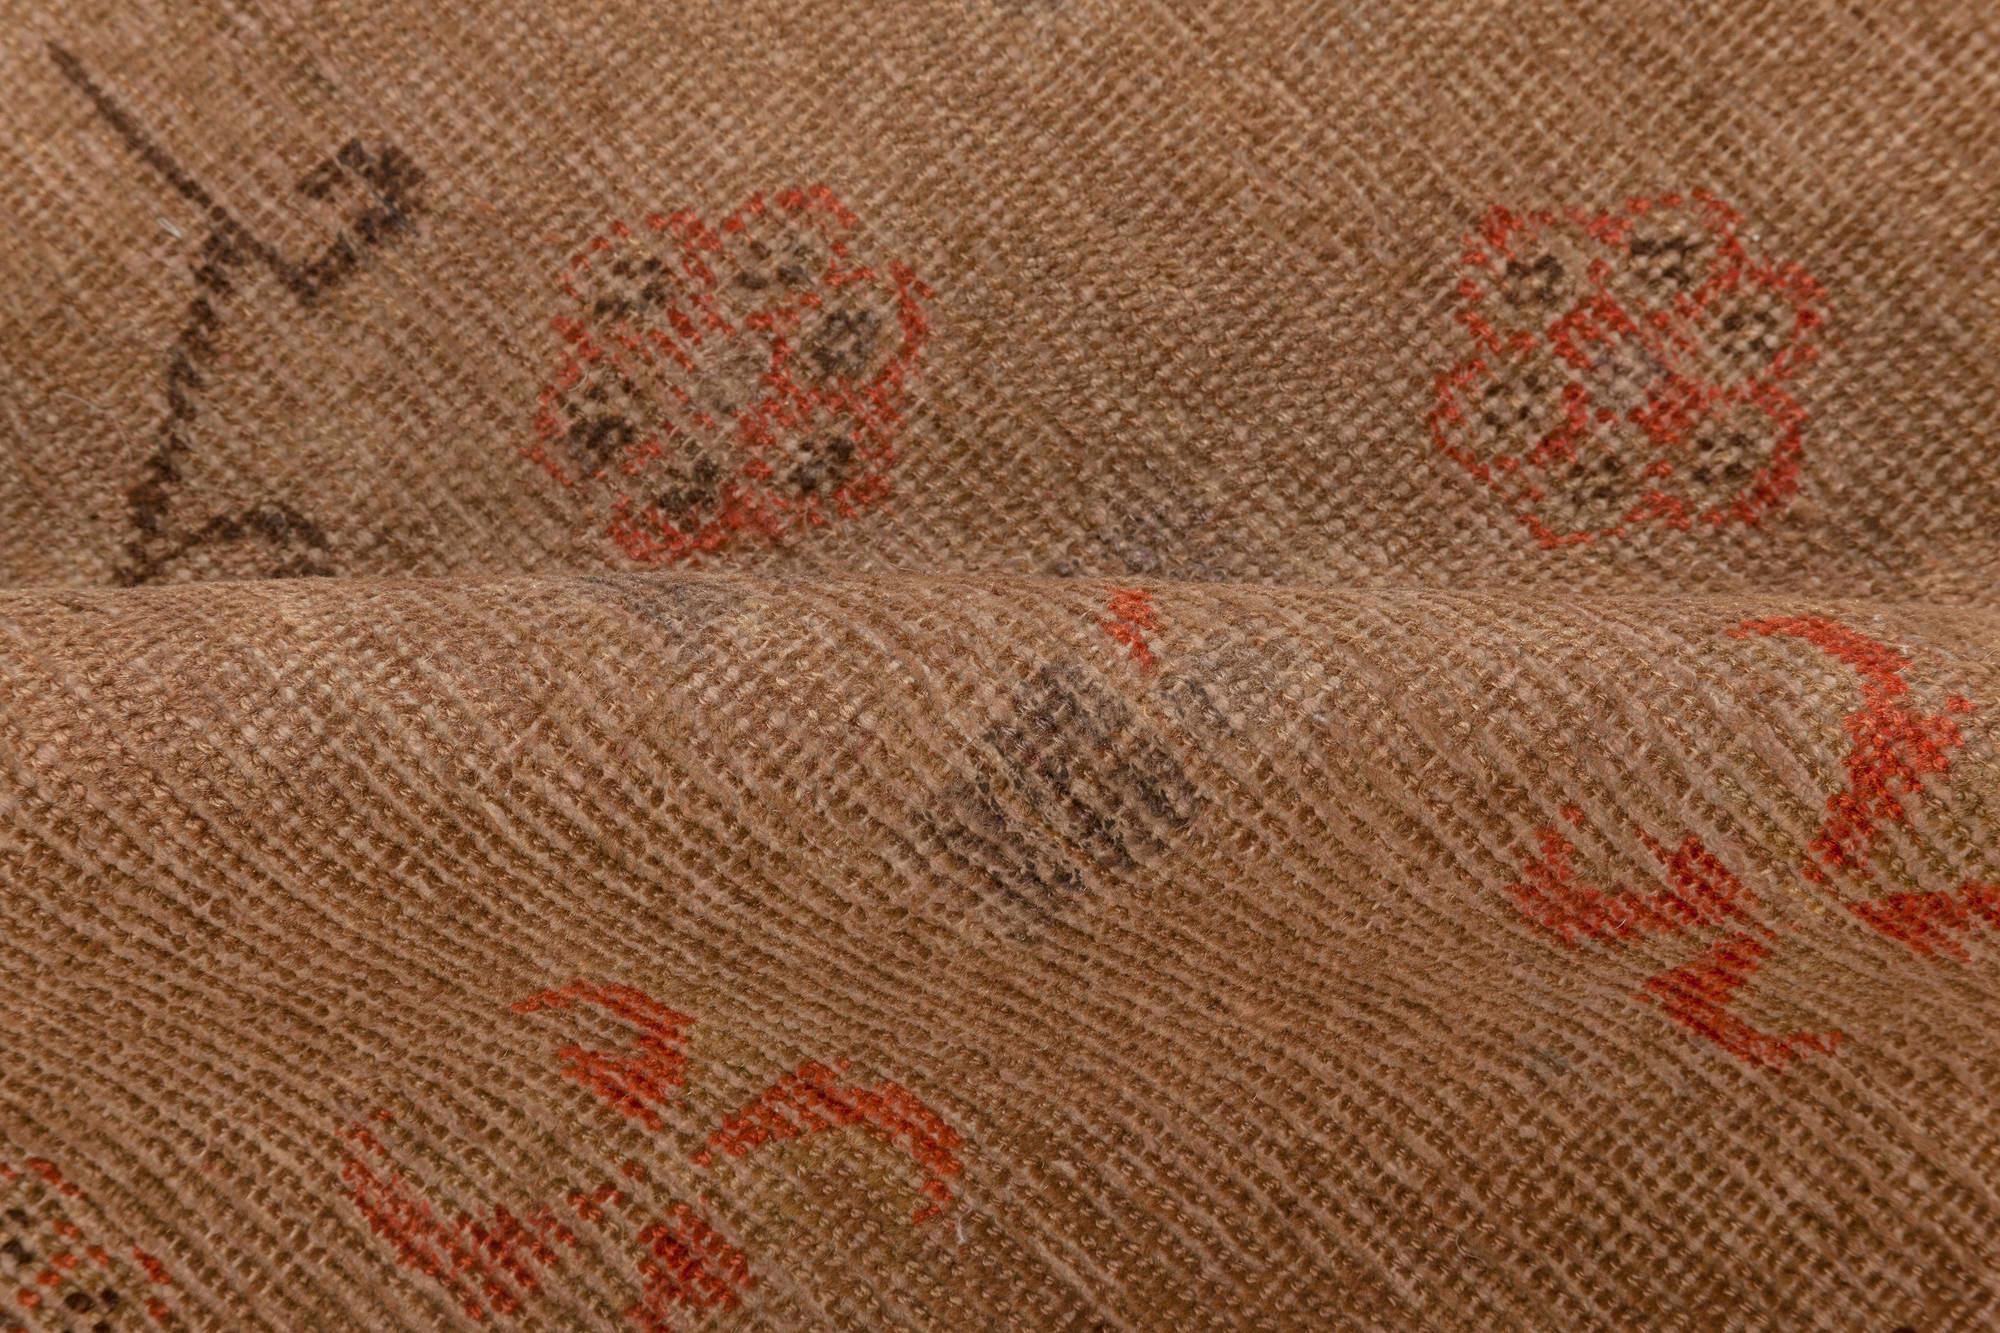 Mid-20th century Samarkand brown, orange, purple handmade wool rug.
Size: 4'9